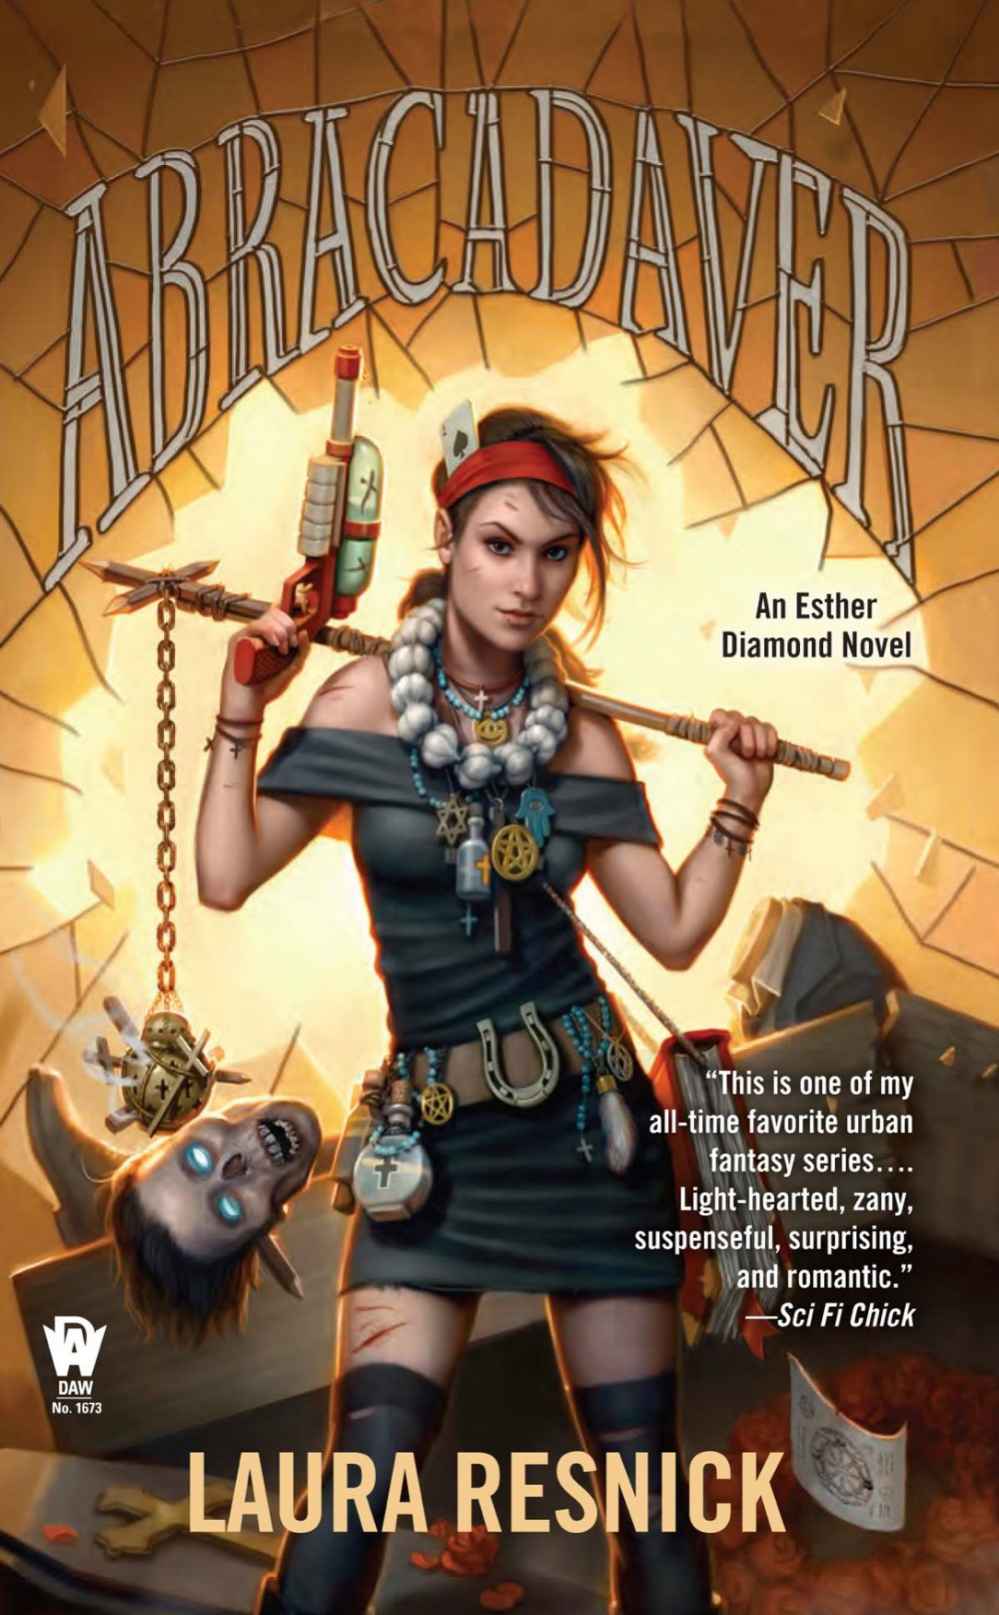 Abracadaver (Esther Diamond Novel) by Laura Resnick